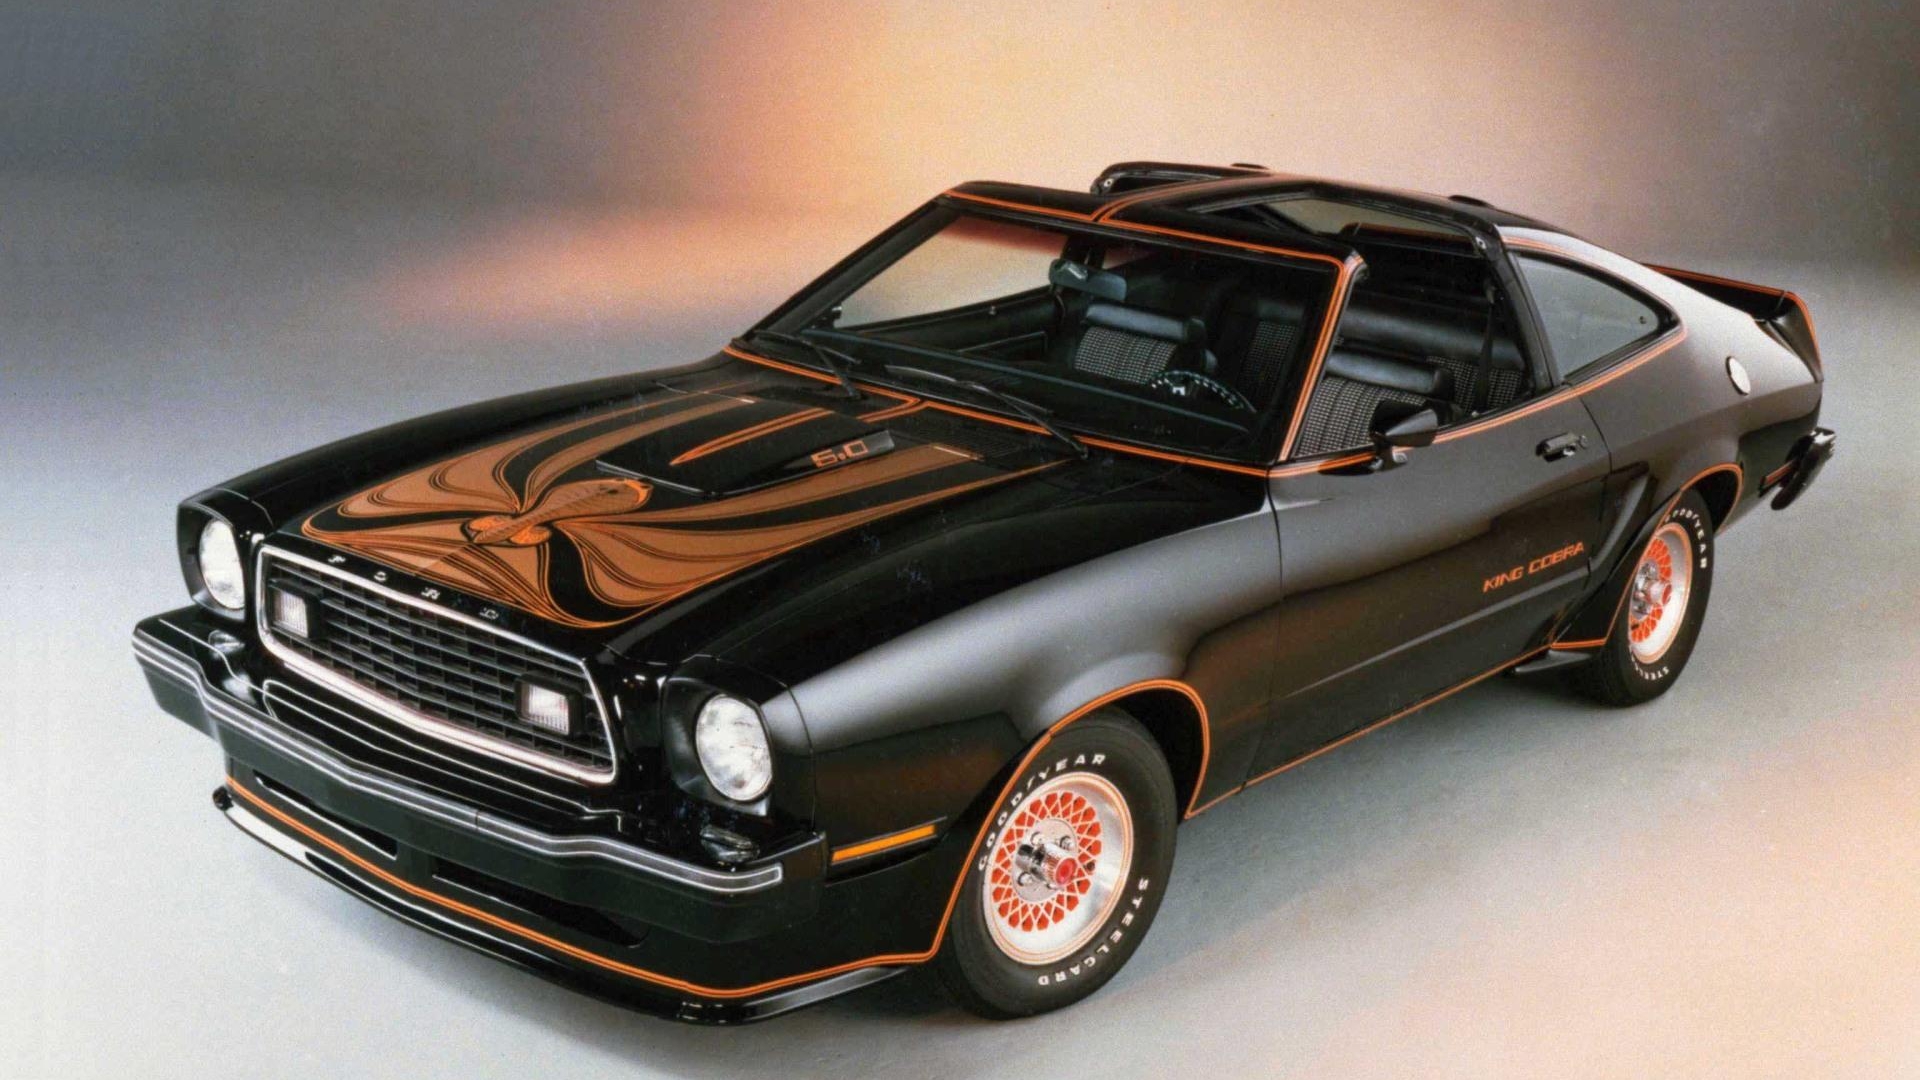 1982 Ford Mustang King Cobra - HD Wallpaper 